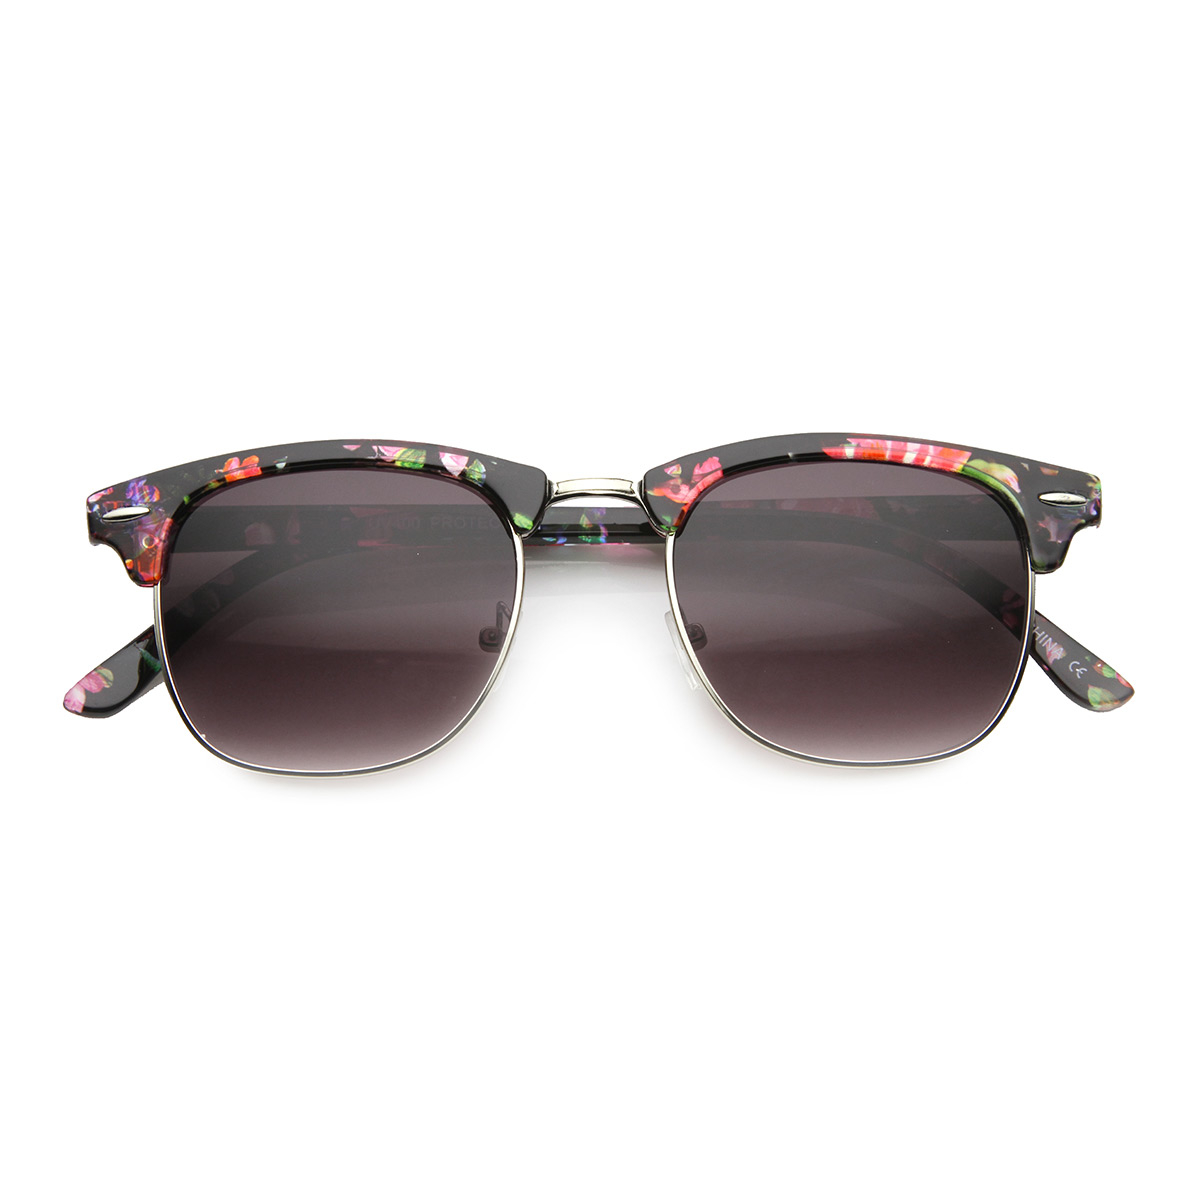 Women's Floral Pattern Square Half-Frame Horn Rimmed Sunglasses 9775 - Clear-Pink / Lavender